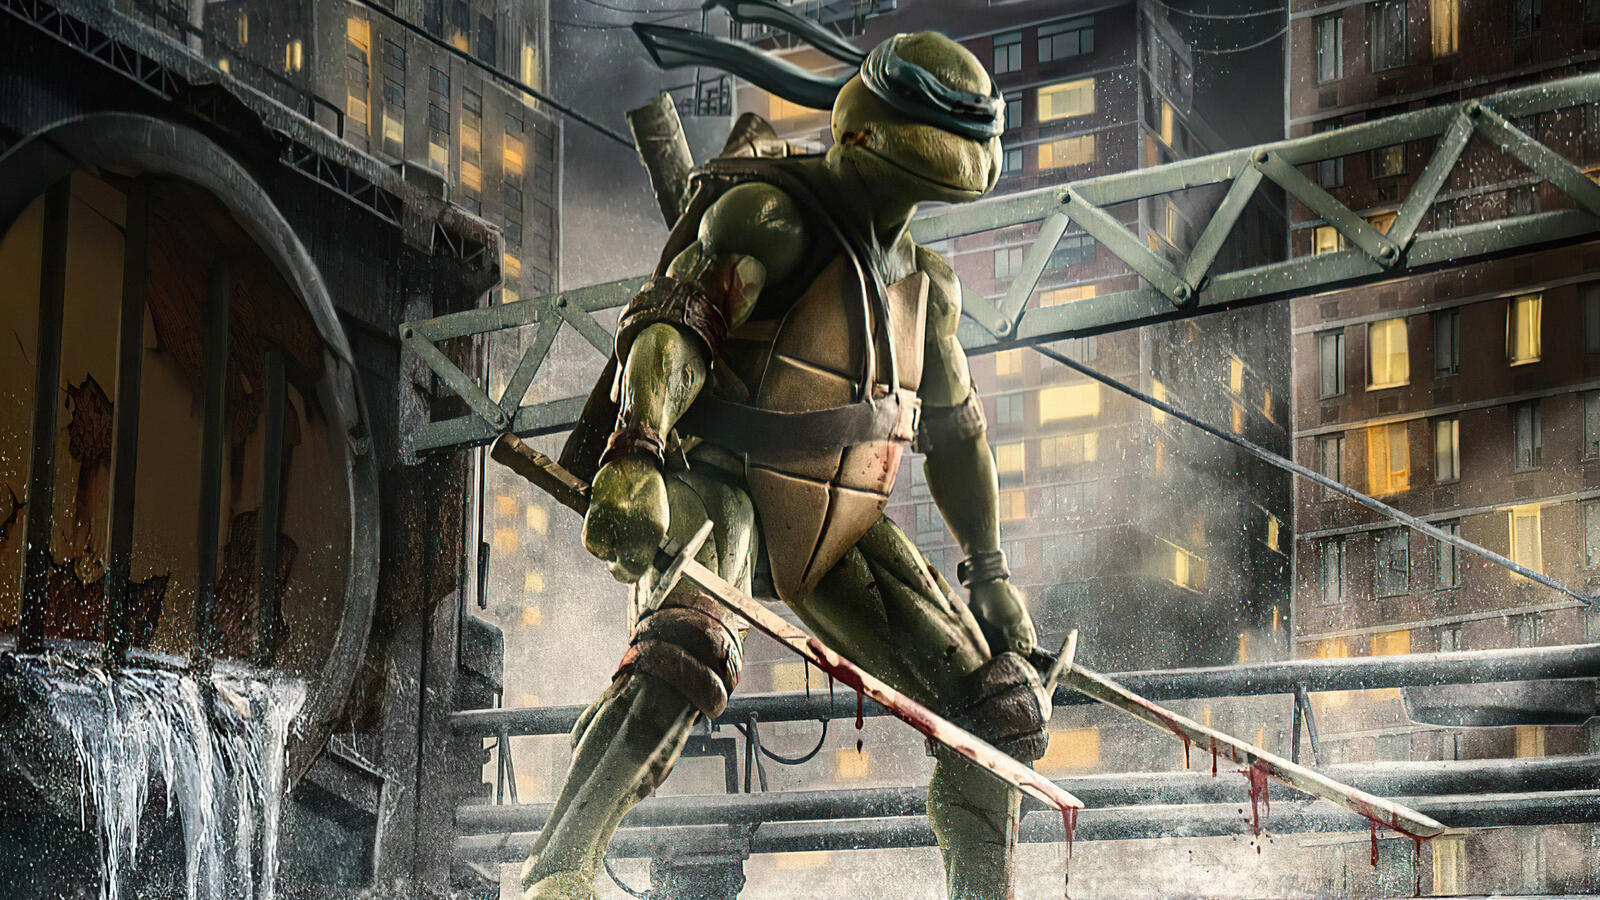 Wallpapers teenage mutant ninja turtles sword movies on the desktop